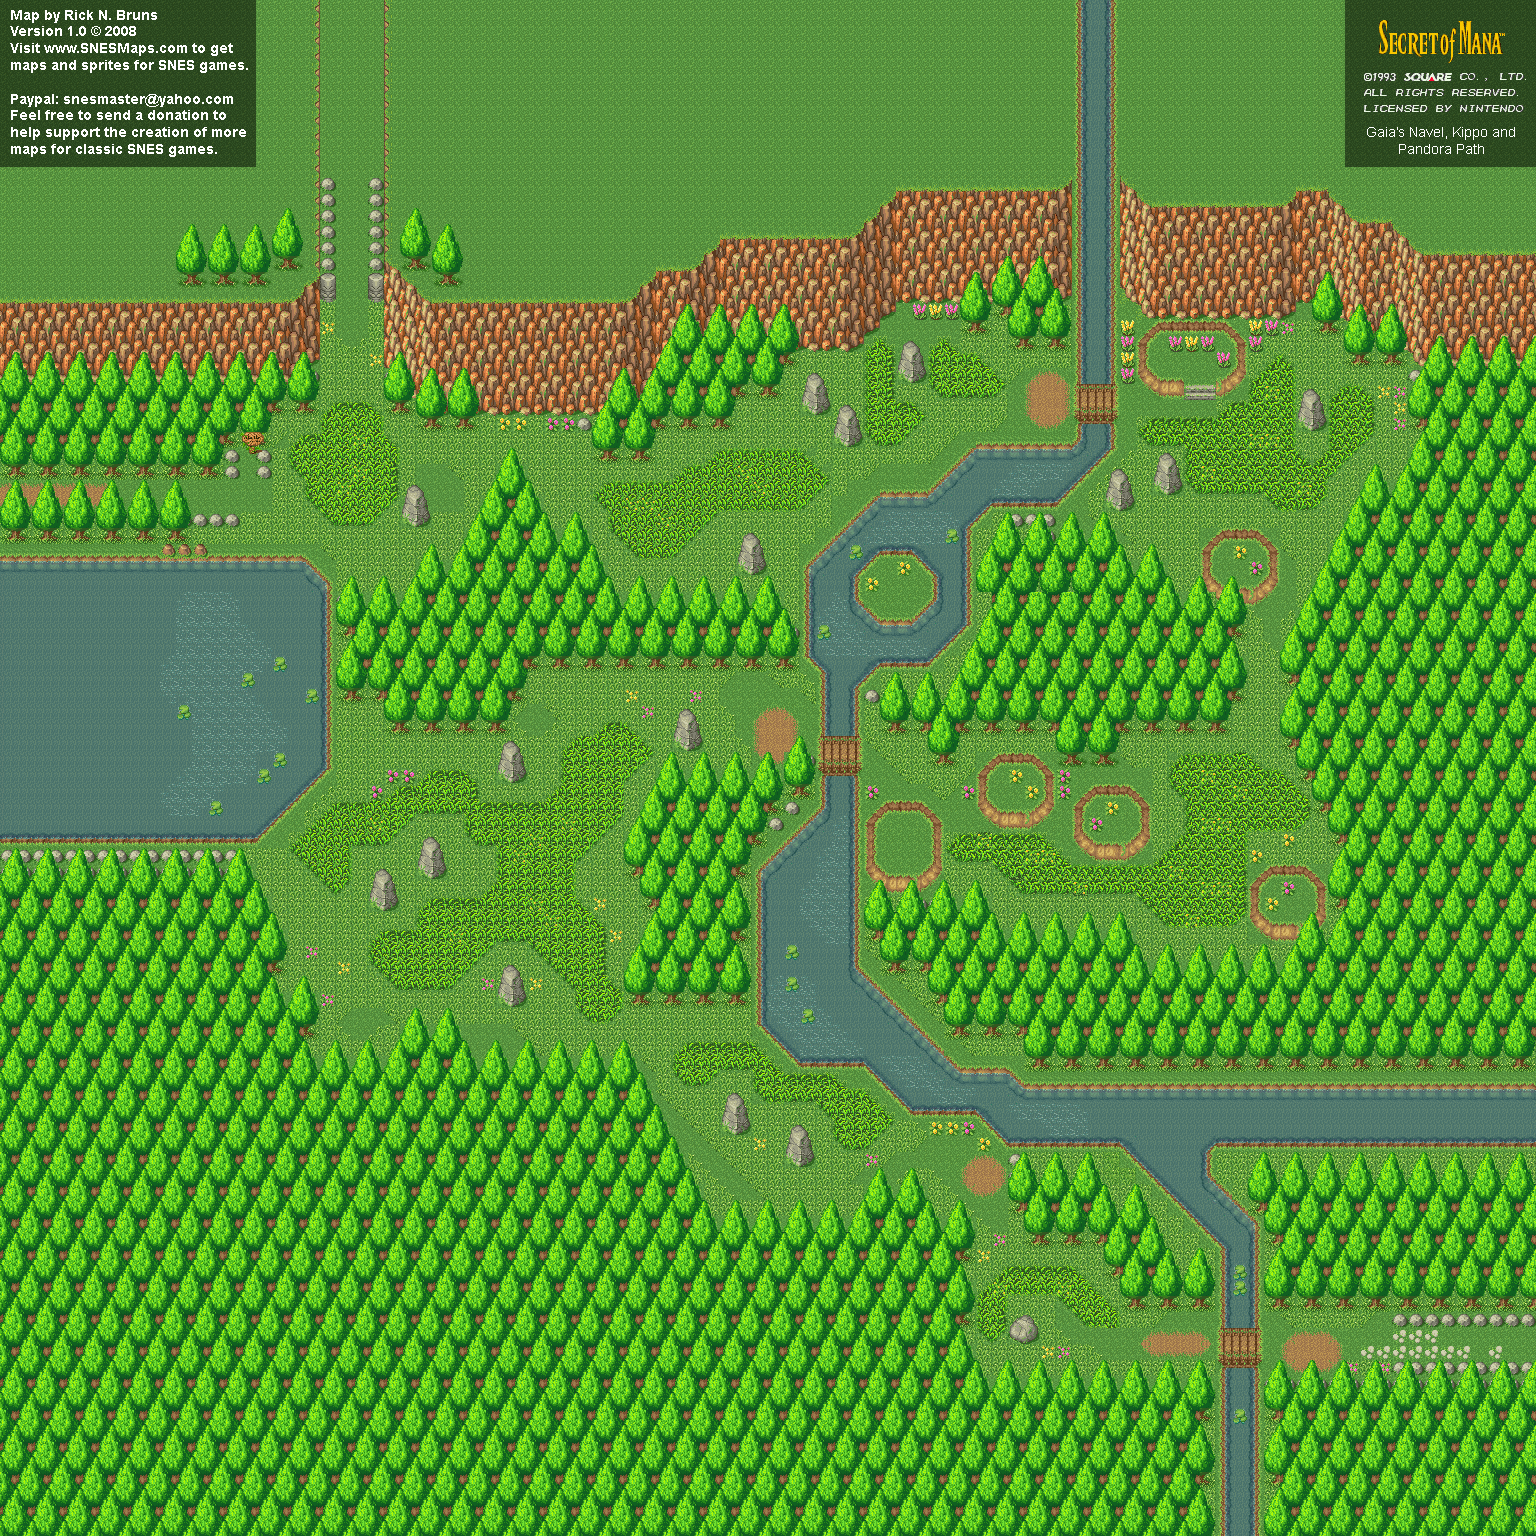 Secret of Mana - Gaia' s Navel, Kippo and Pandora Path - Super Nintendo SNES Background Map